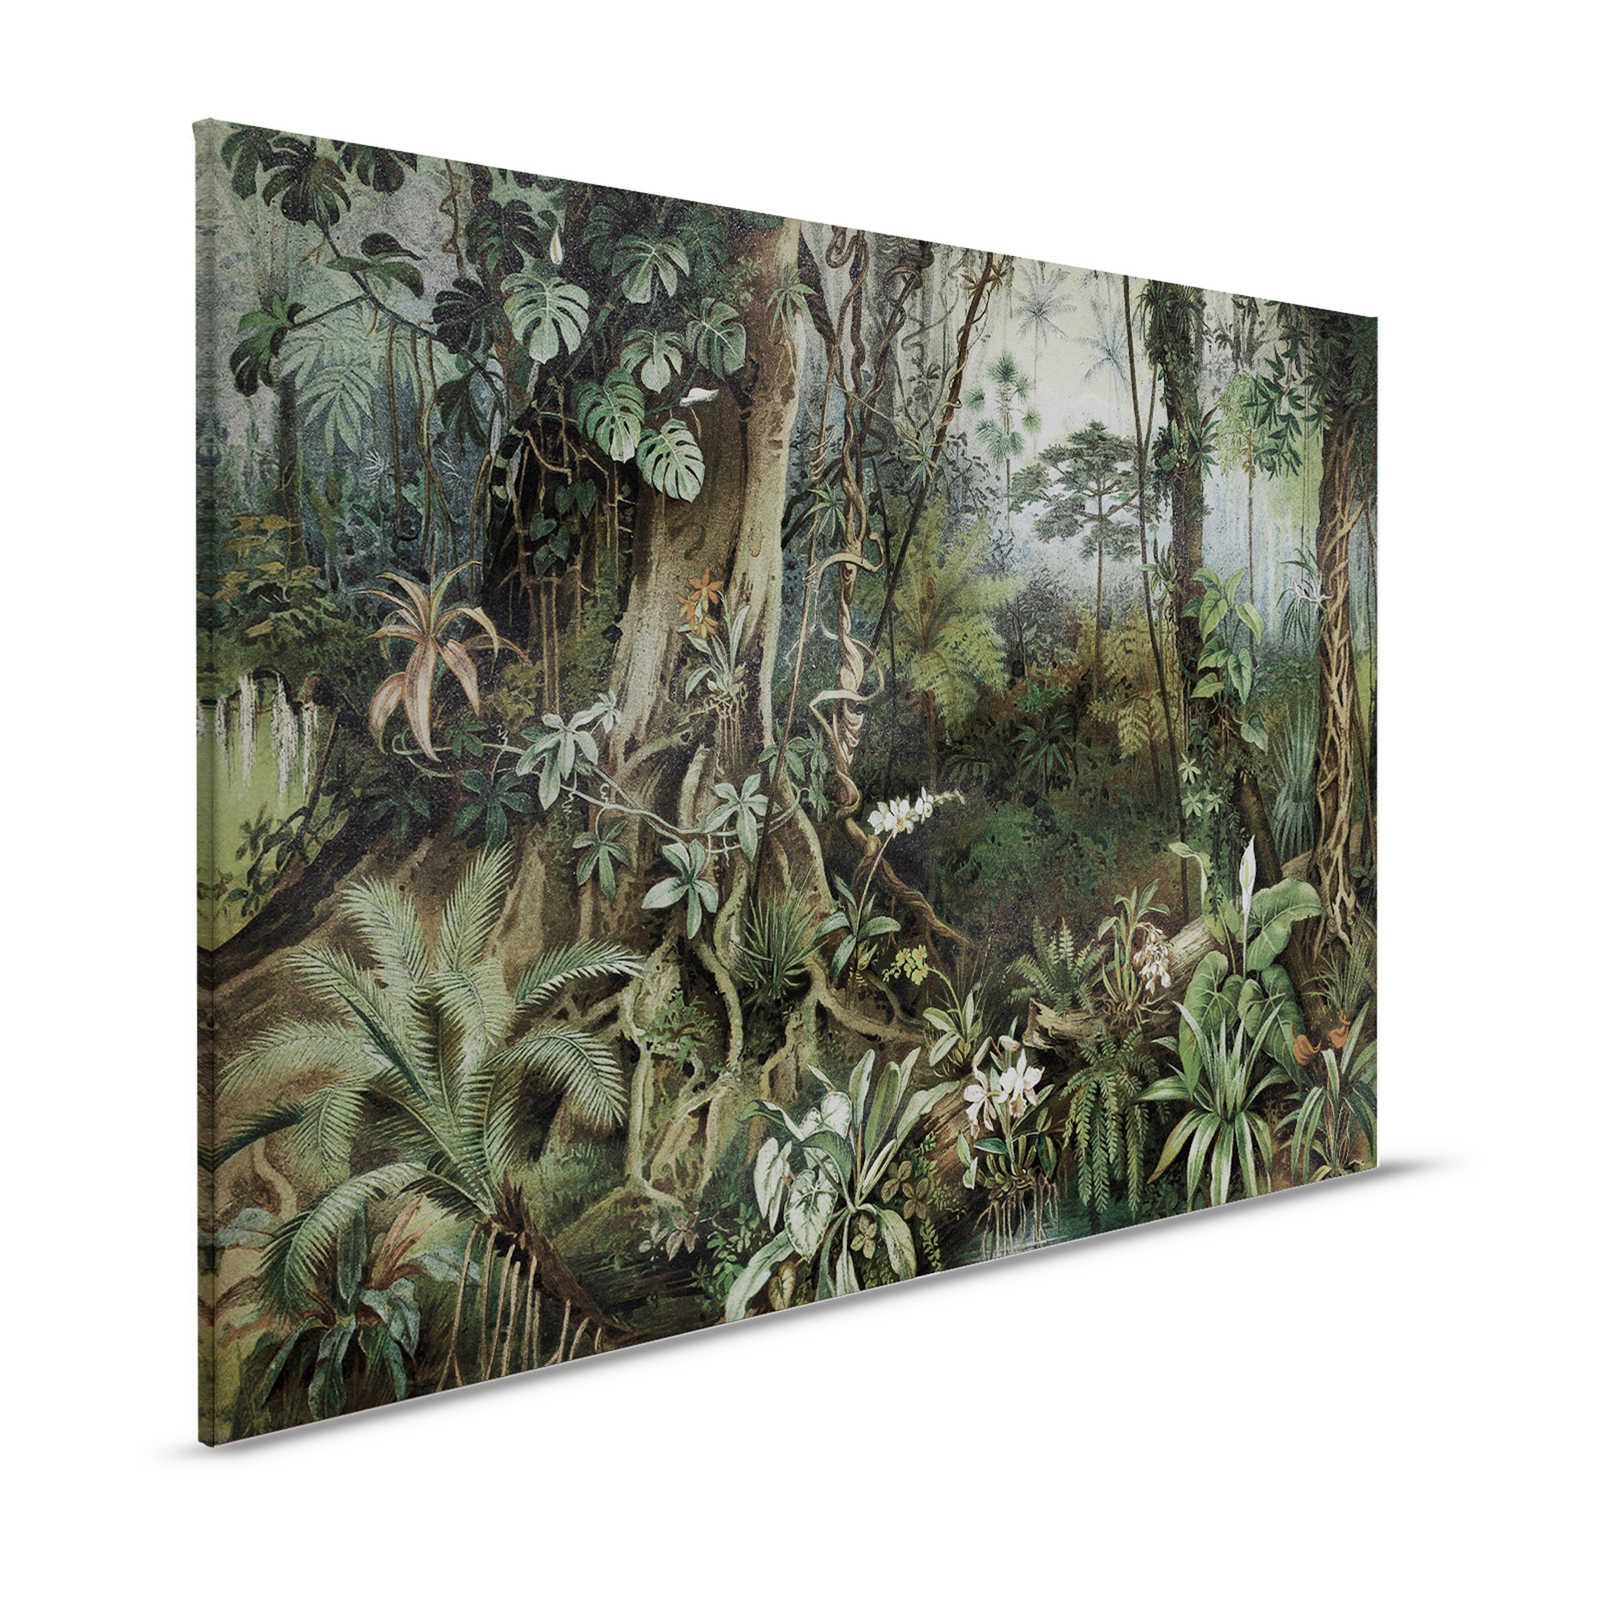 Jungle Tekeningstijl Canvas Beeld - 1,20 m x 0,80 m
